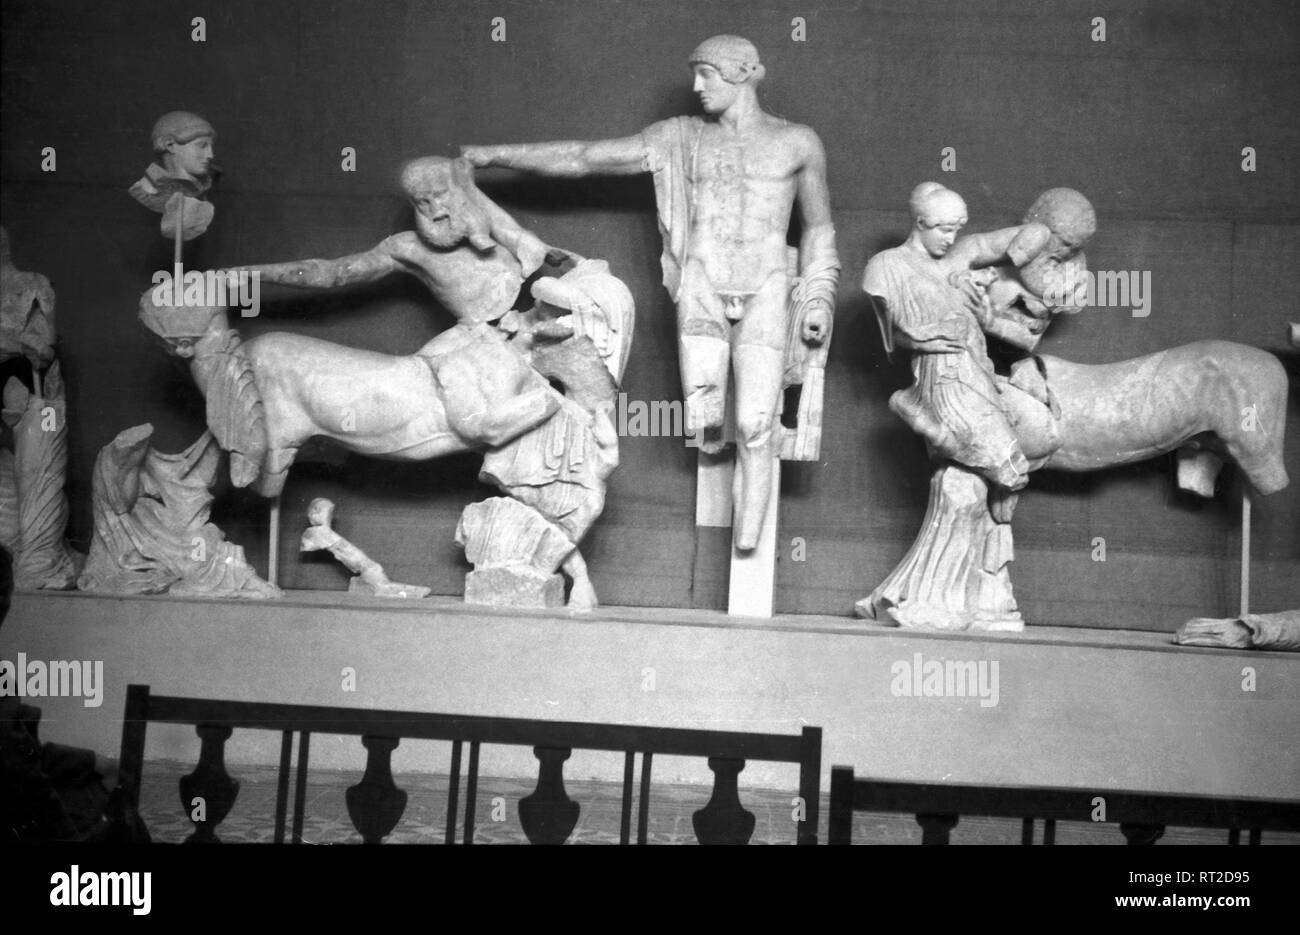 Griechenland, Grecia - Figurengruppe im Museum der Stadt Olympia in Griechenland, 1950er Jahre. Gruppo di scultura presso il museo in Olympia, Grecia, 1950s. Foto Stock